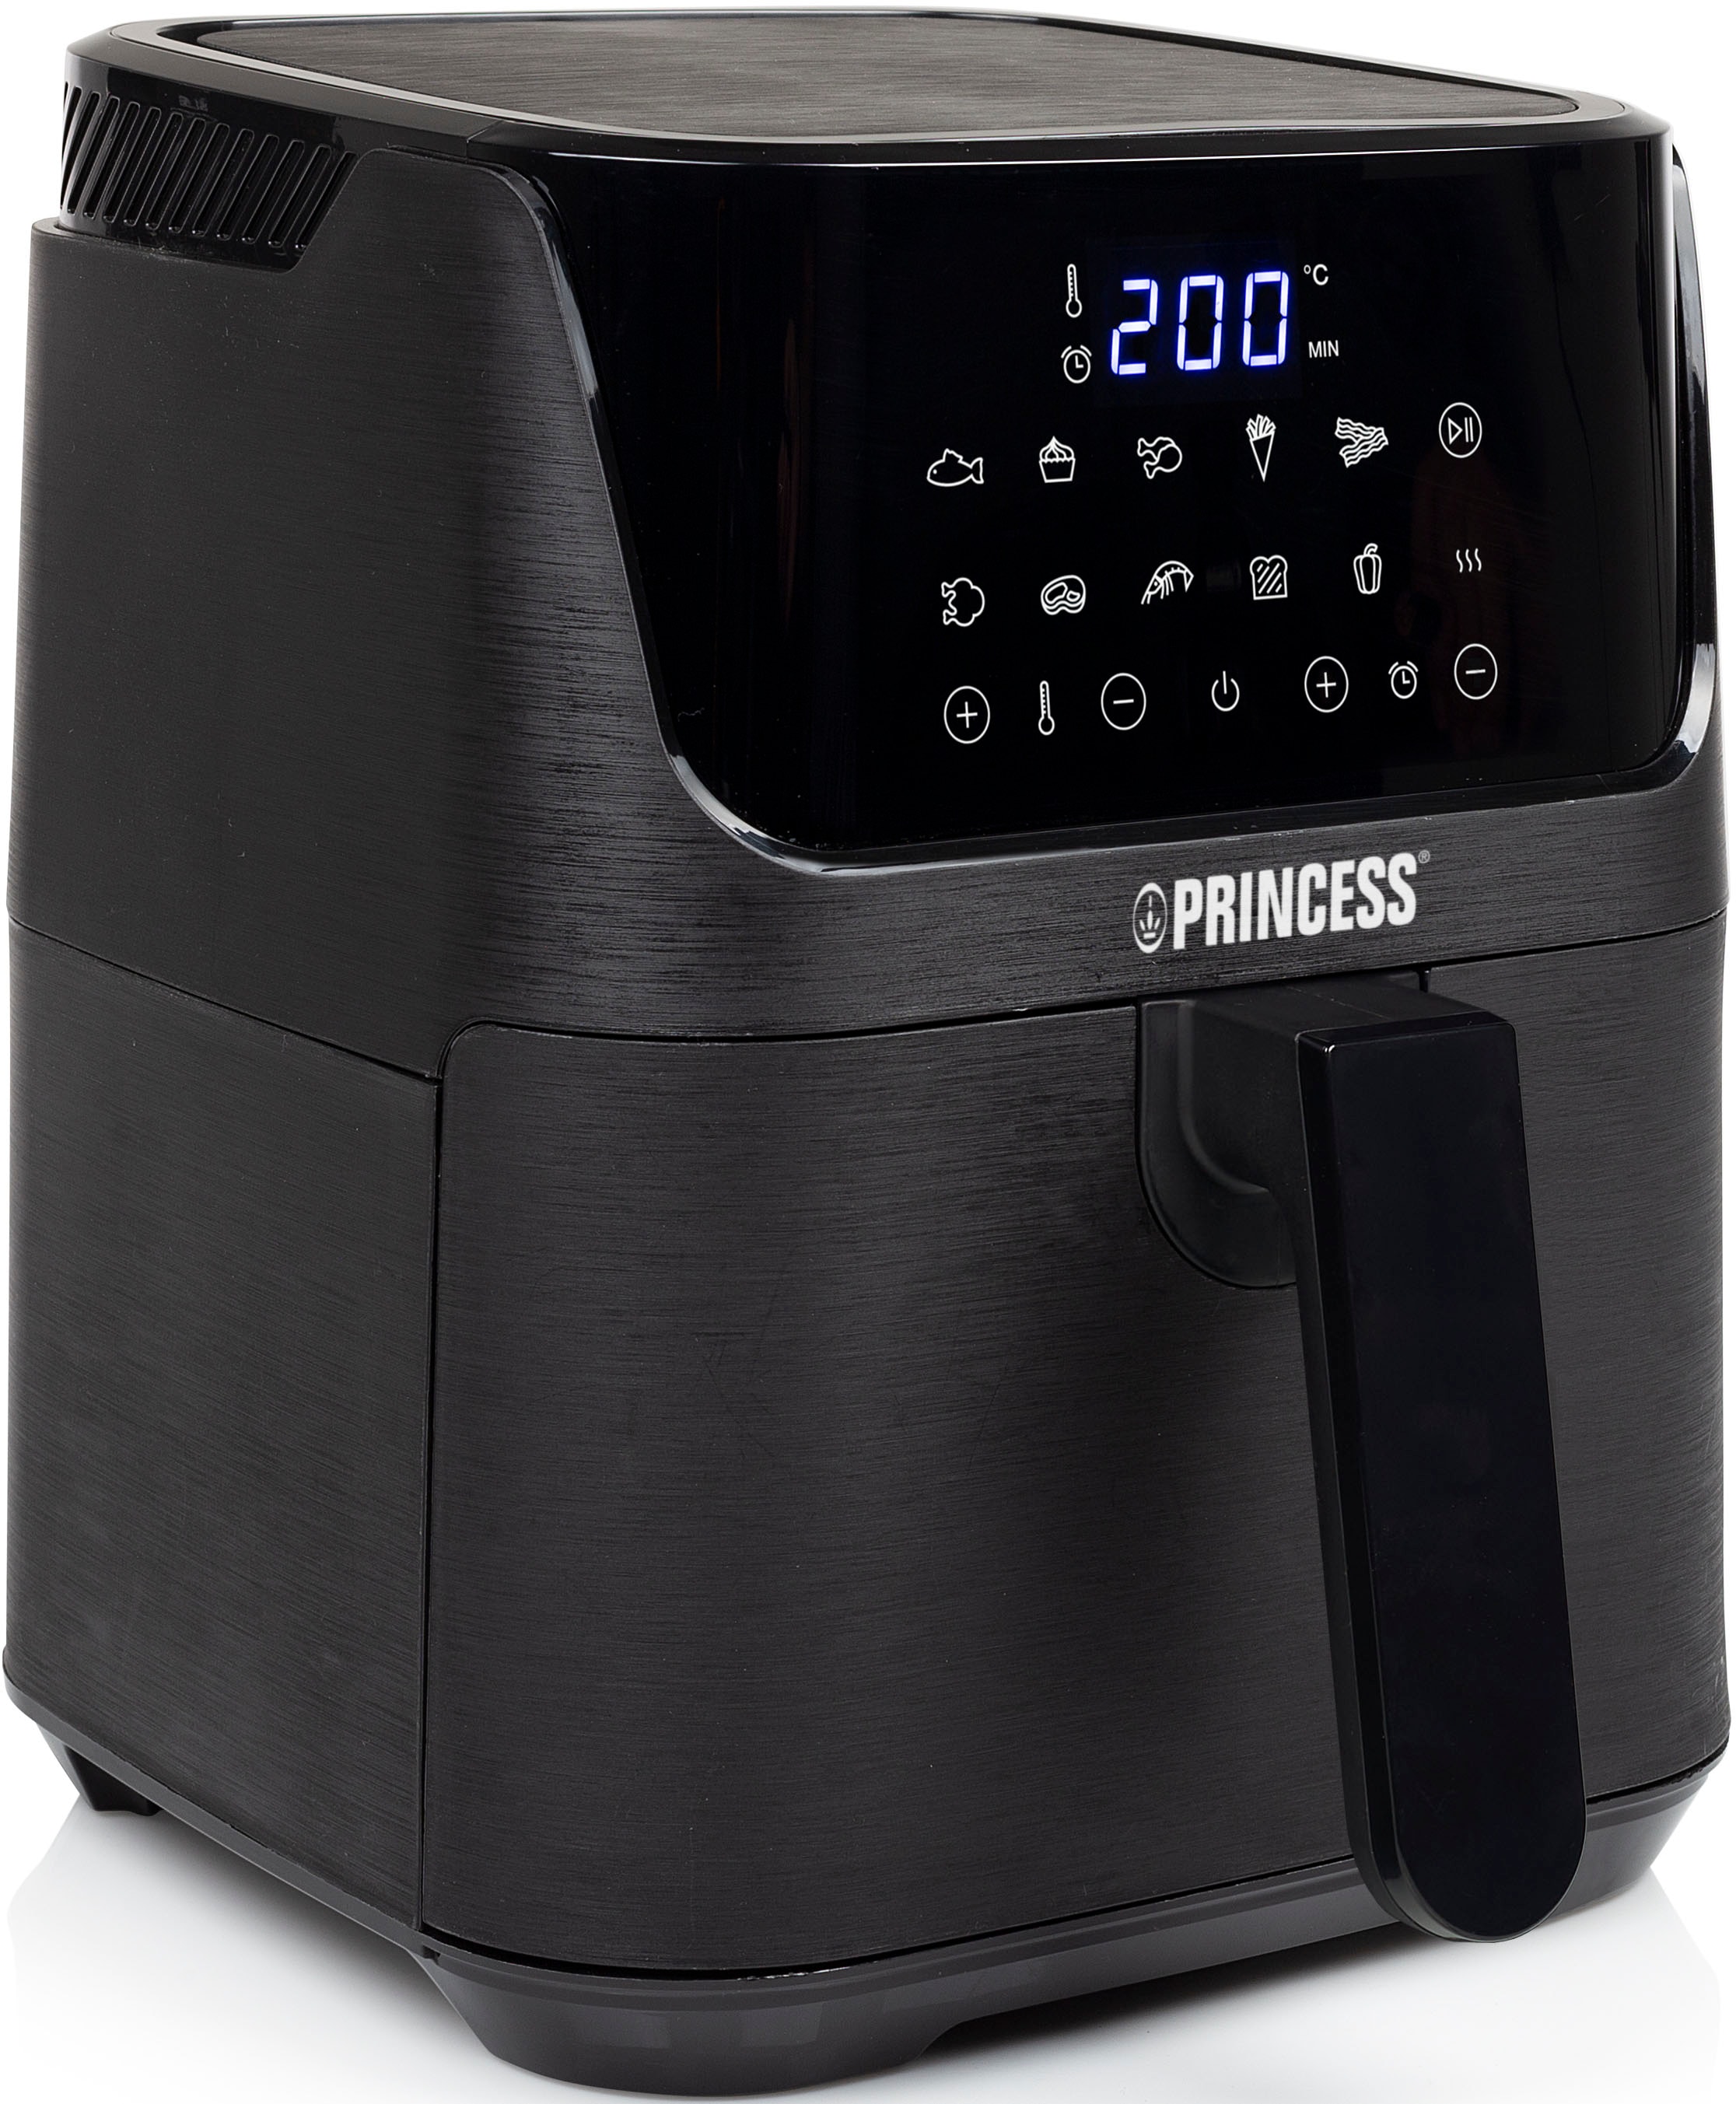 PRINCESS Heißluftfritteuse »182024«, - Garantie Jahren W, XXL - 1350 mit Heißluftfritteuse Touchscreen 3 3,5 XL L Digitaler